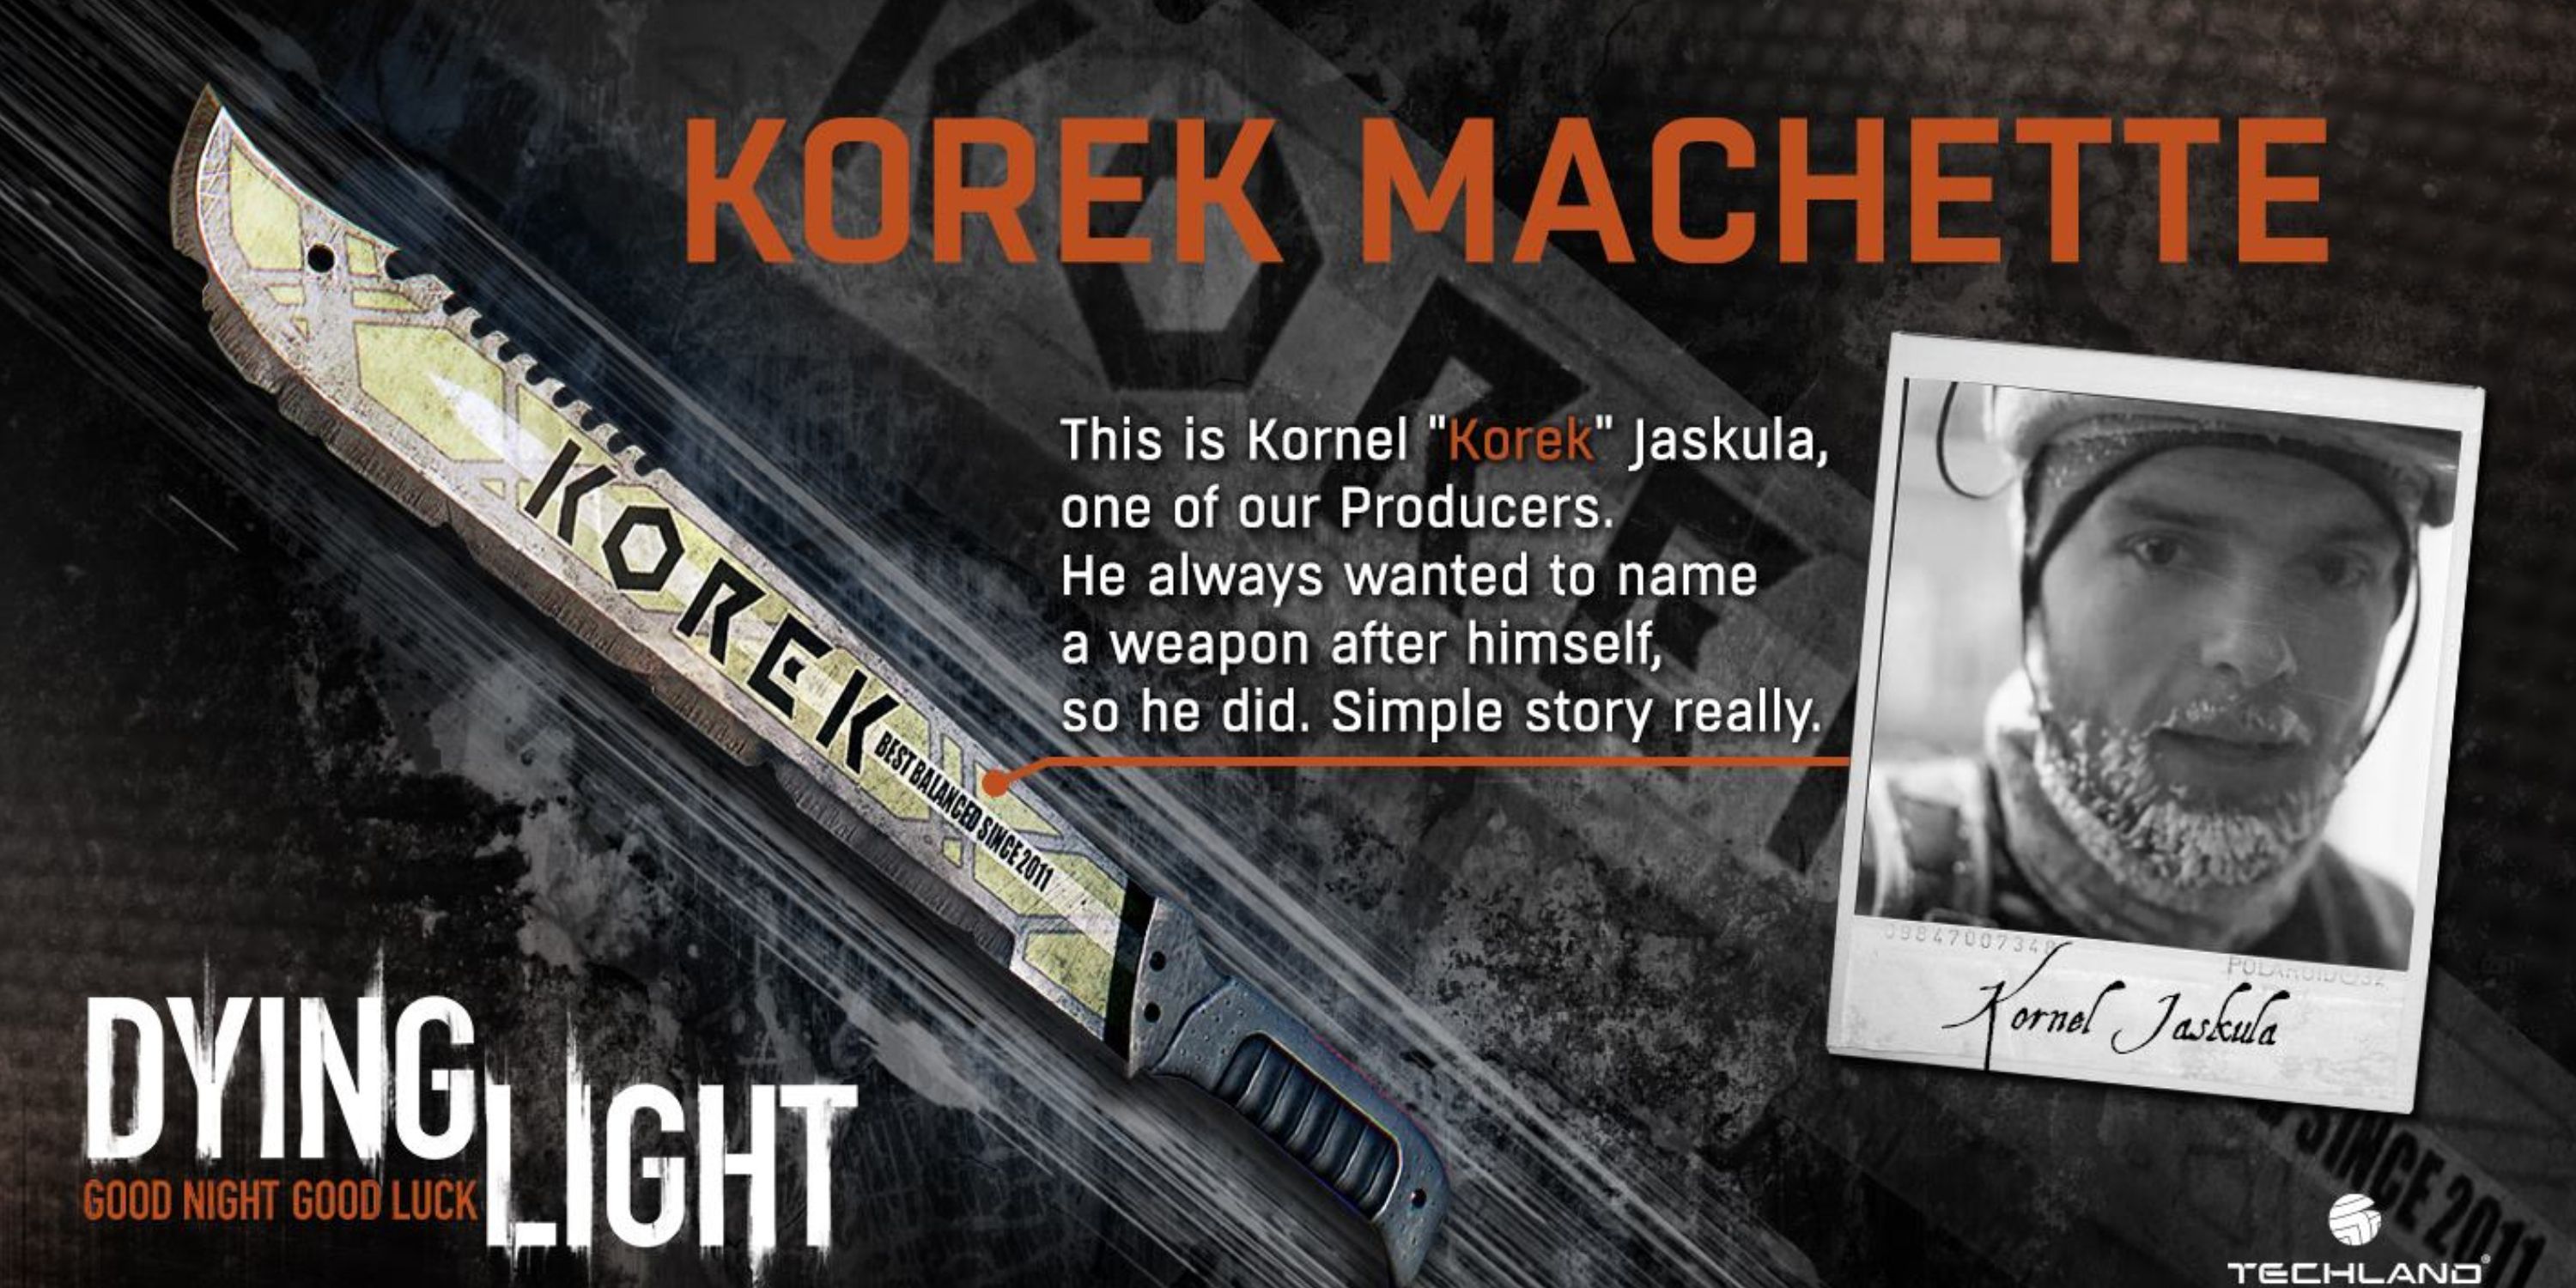 korek machete information sheet